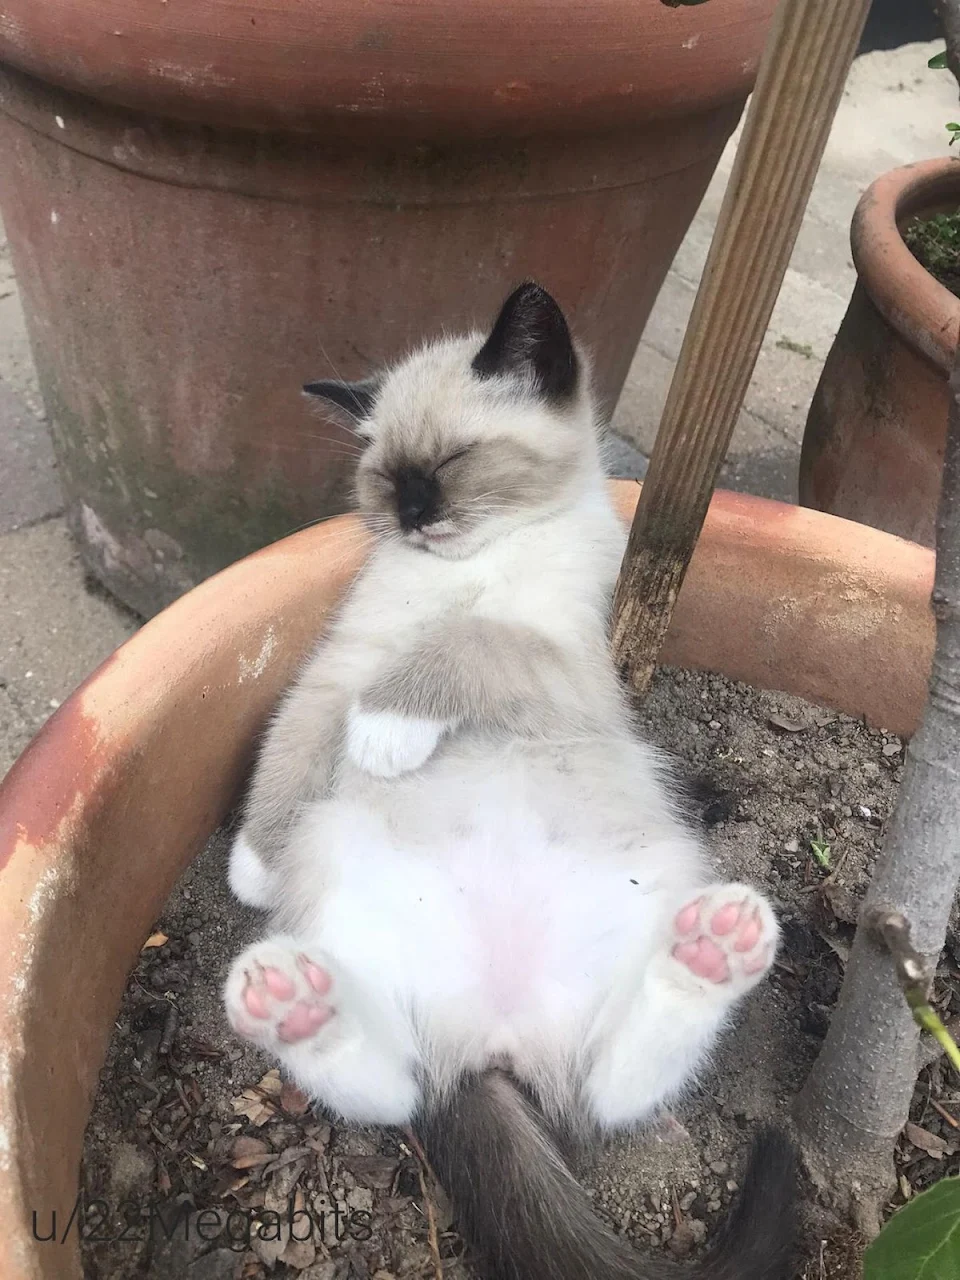 She fell asleep in the flowerpot ❤️